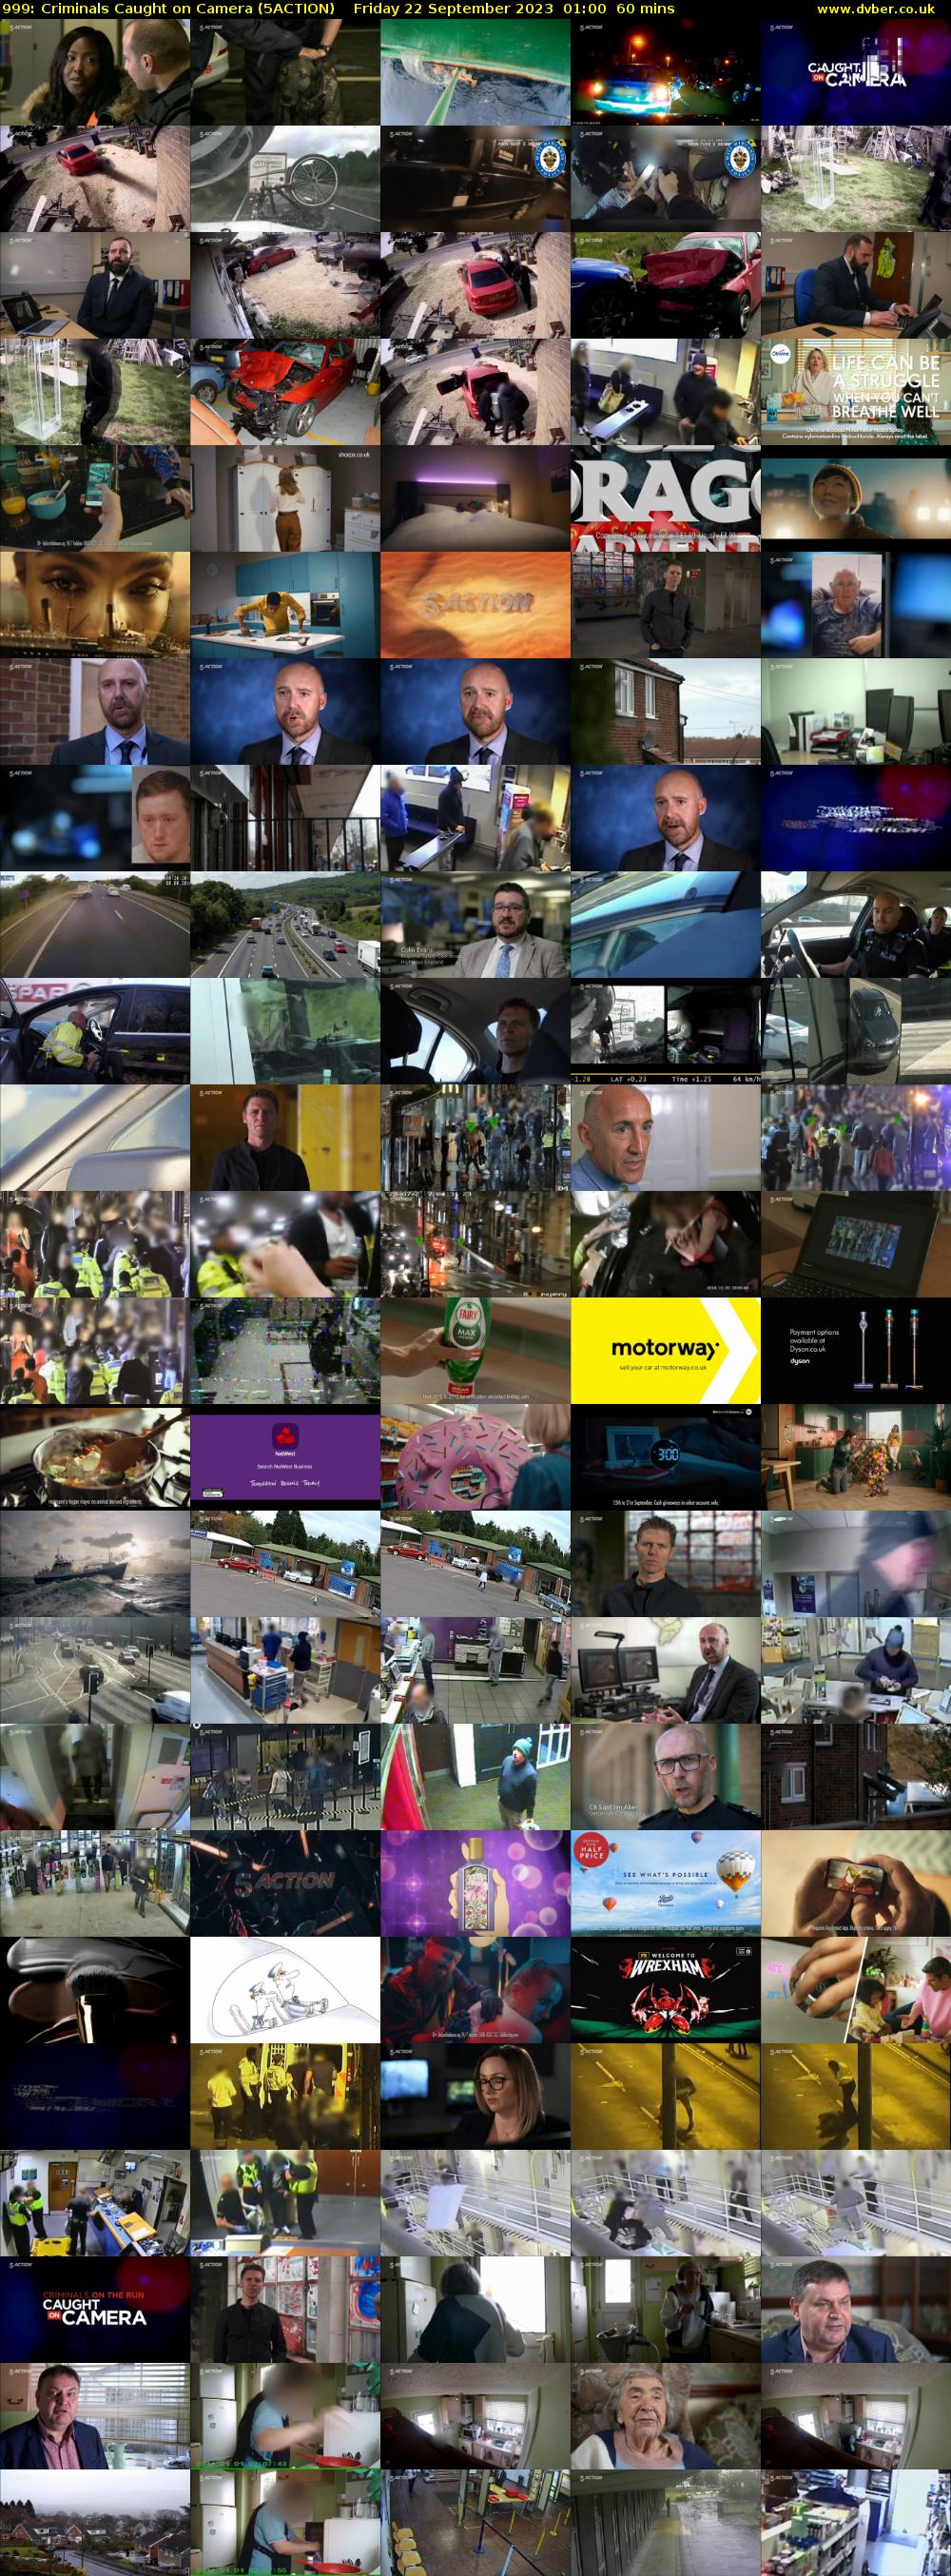 999: Criminals Caught on Camera (5ACTION) Friday 22 September 2023 01:00 - 02:00